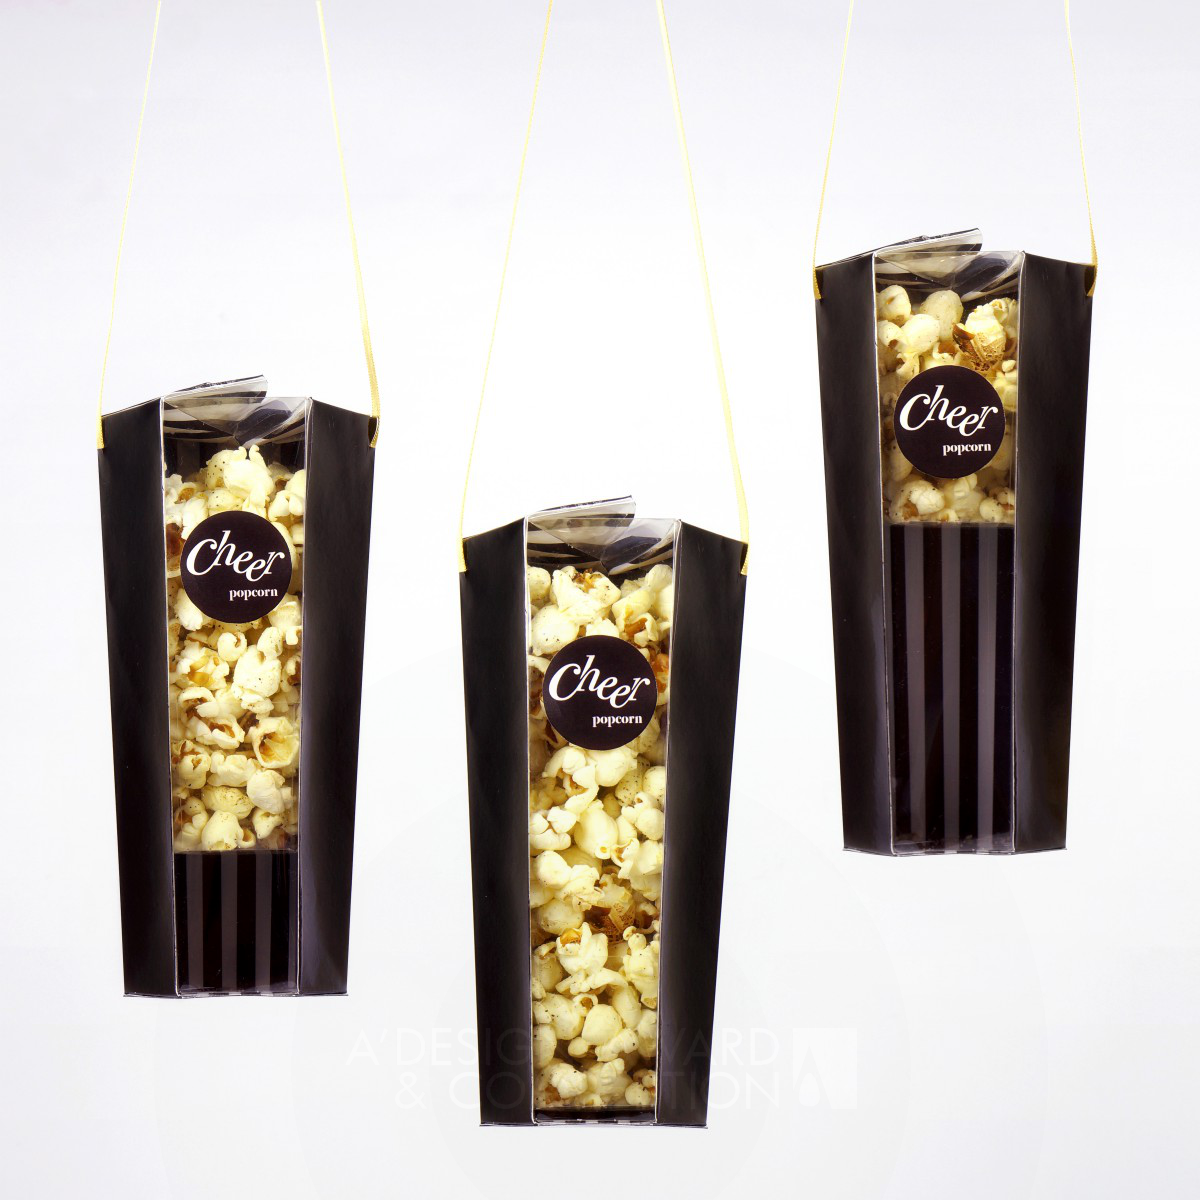 Cheer popcorn Popcorn Package by Natsuyo Ozawa